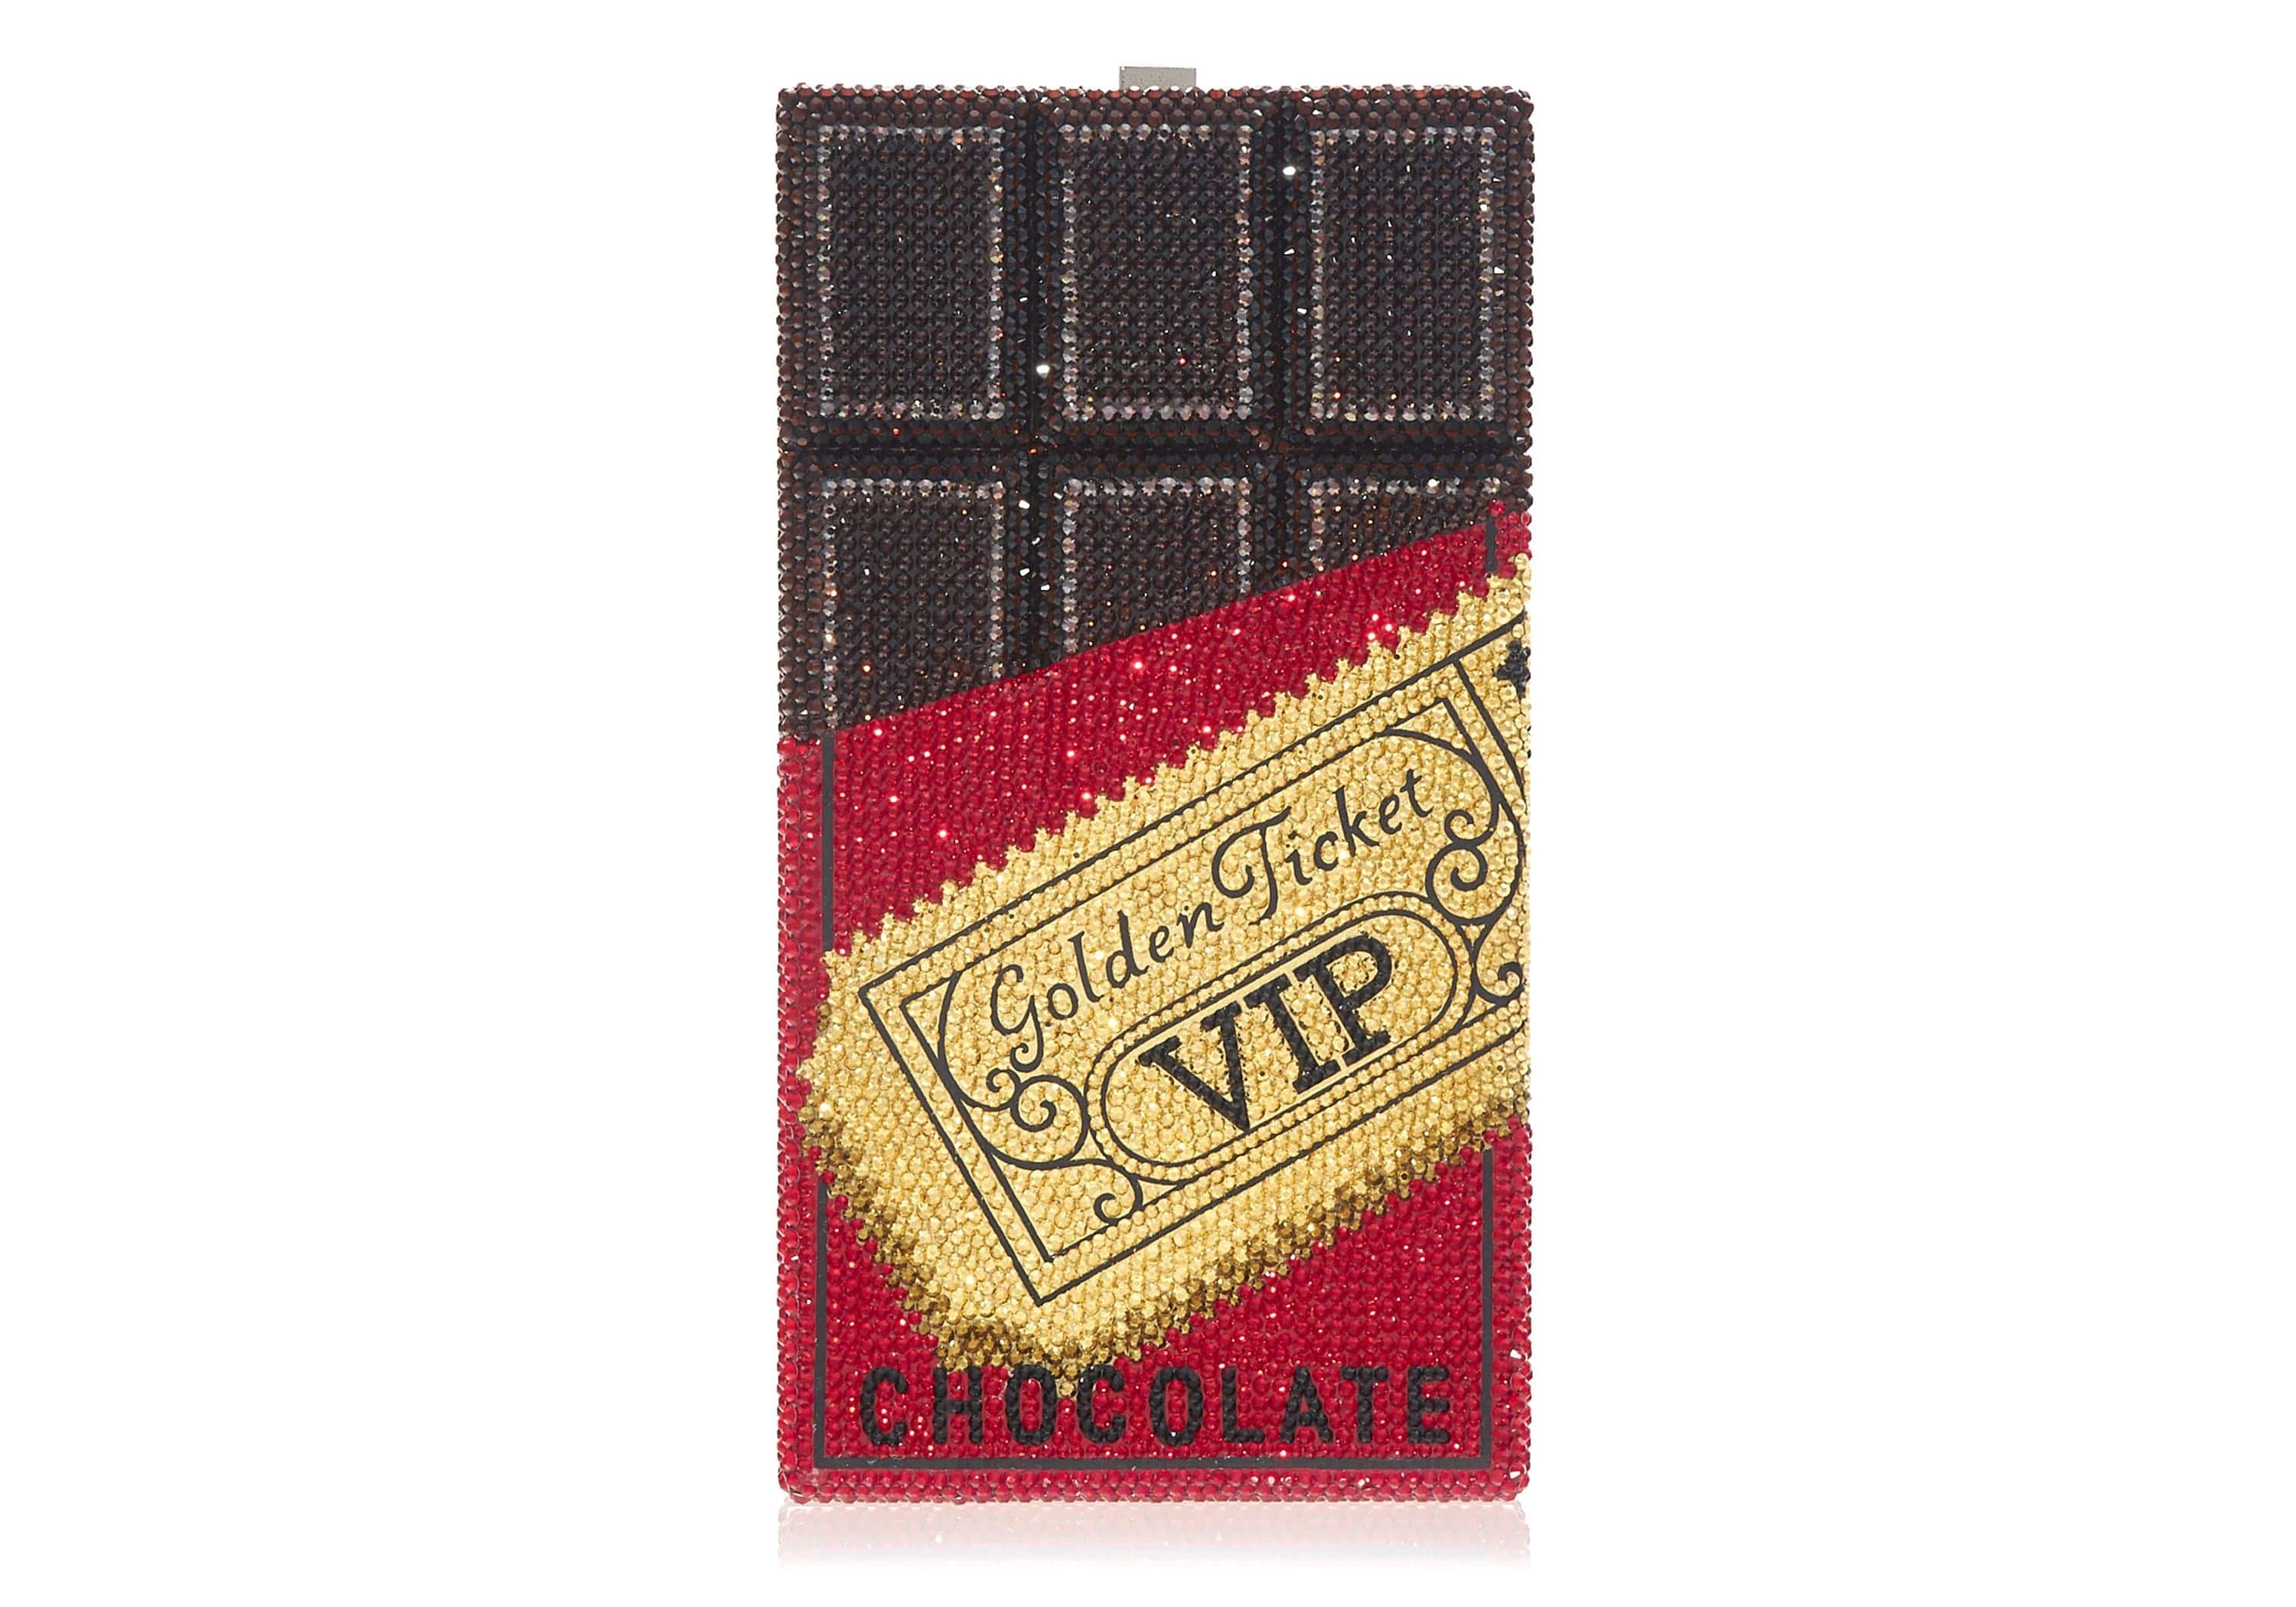 Chocolate Bar Golden Ticket